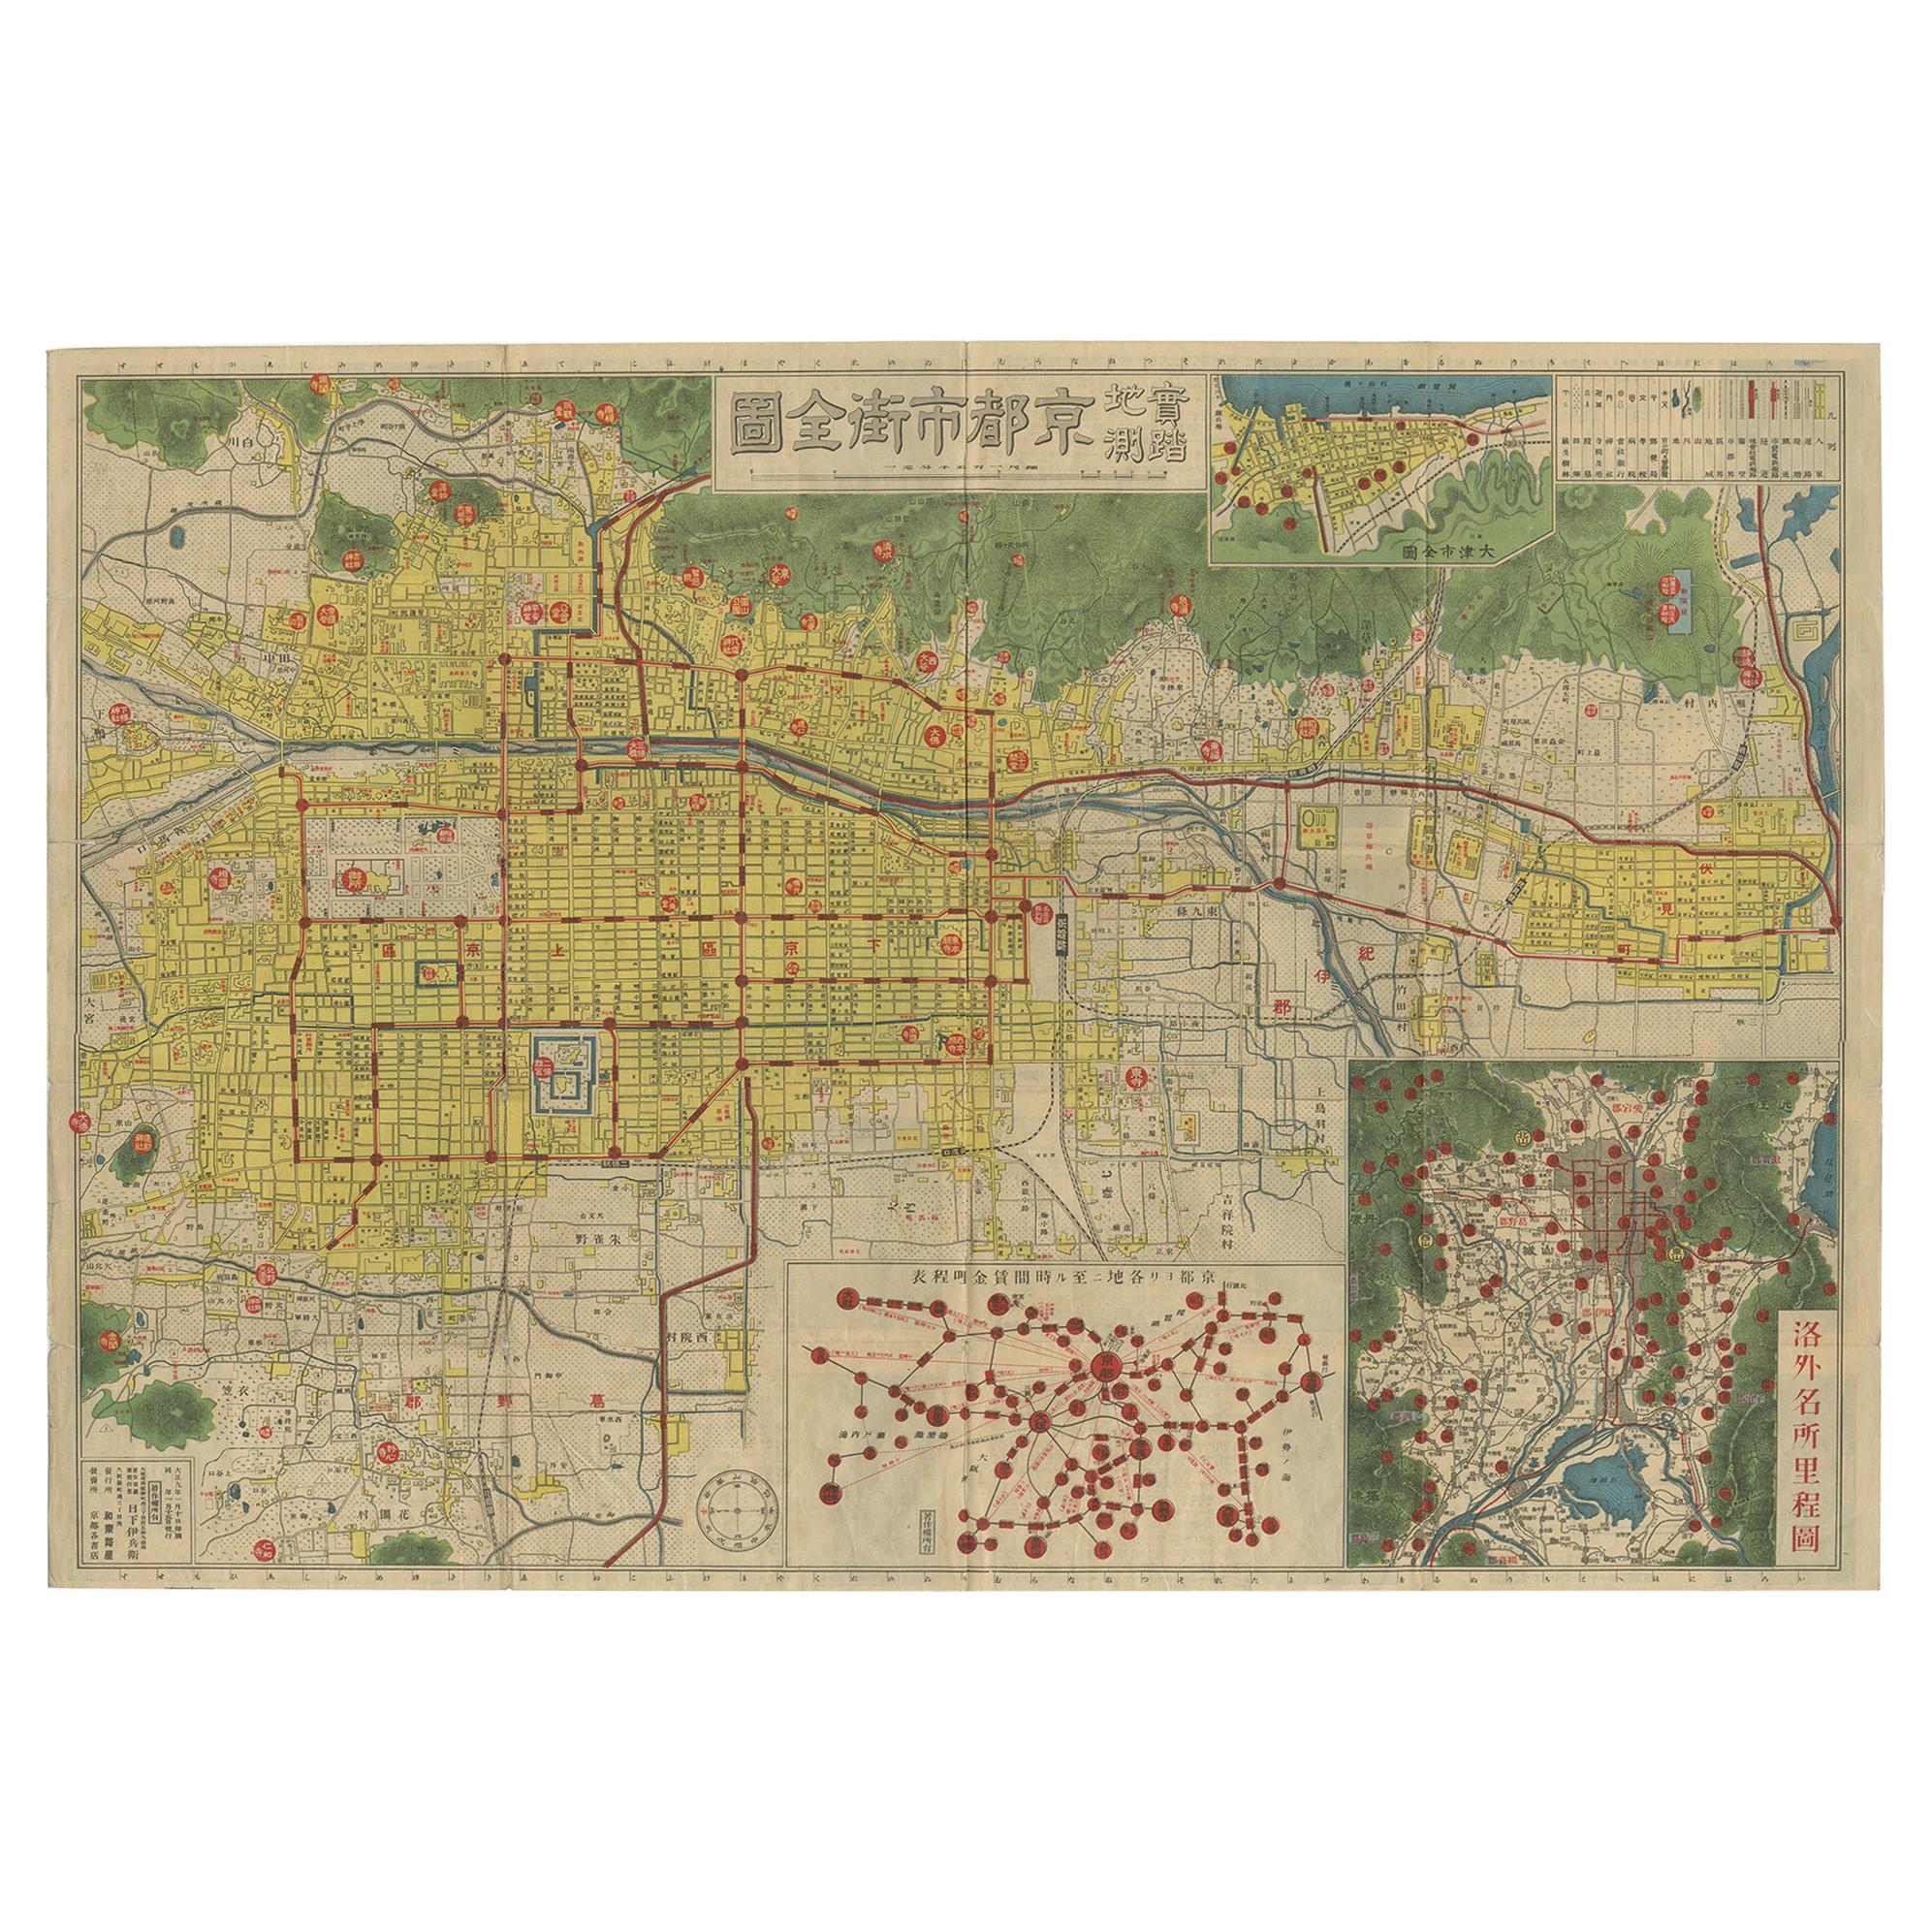 Antique Folding Map of Kyoto, Japan, 1920